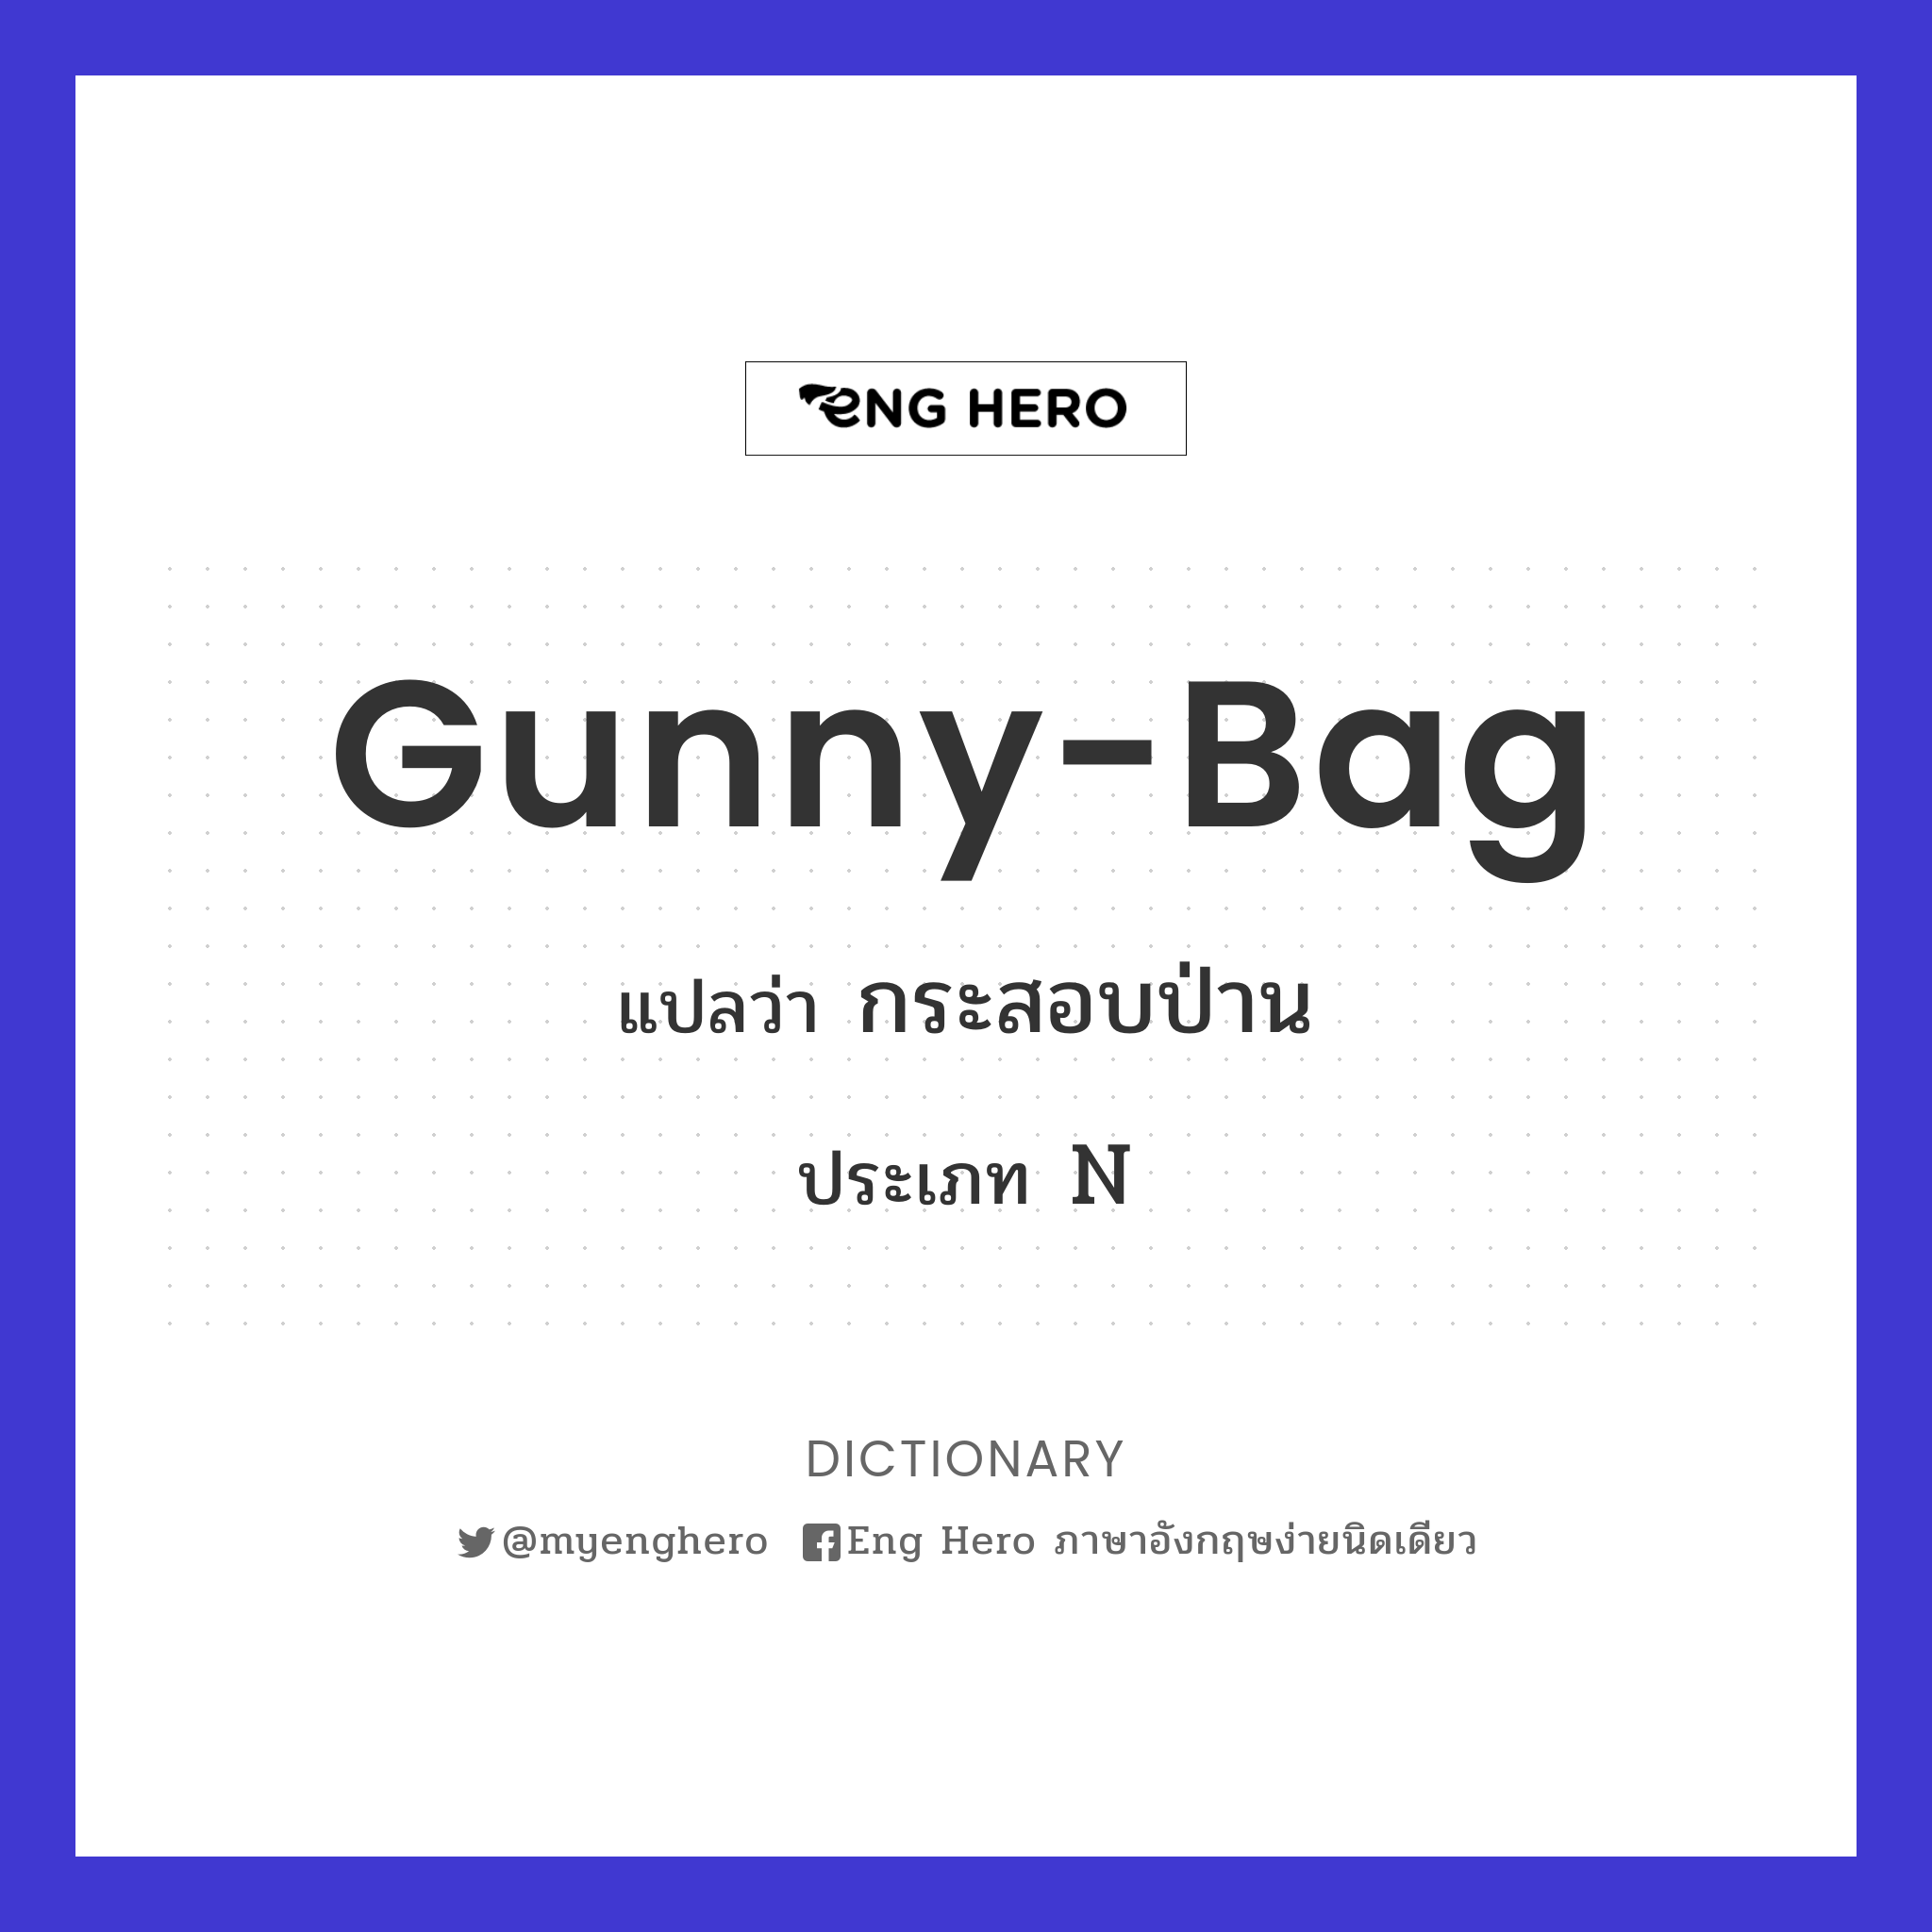 gunny-bag